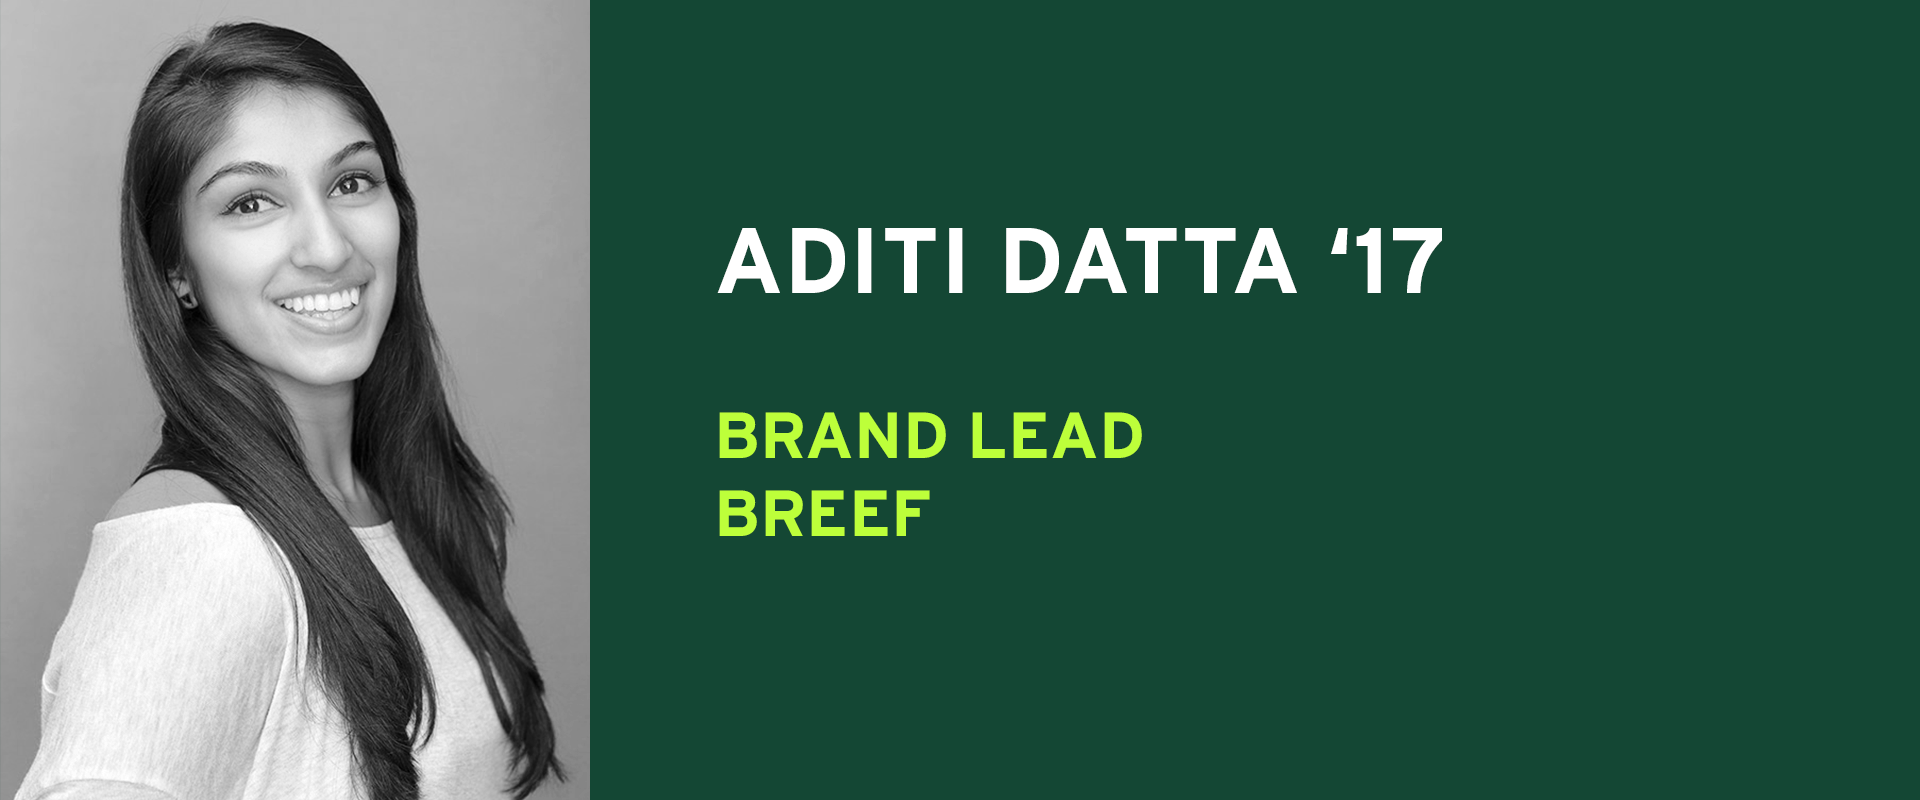 Aditi Datta Brand Lead Breef